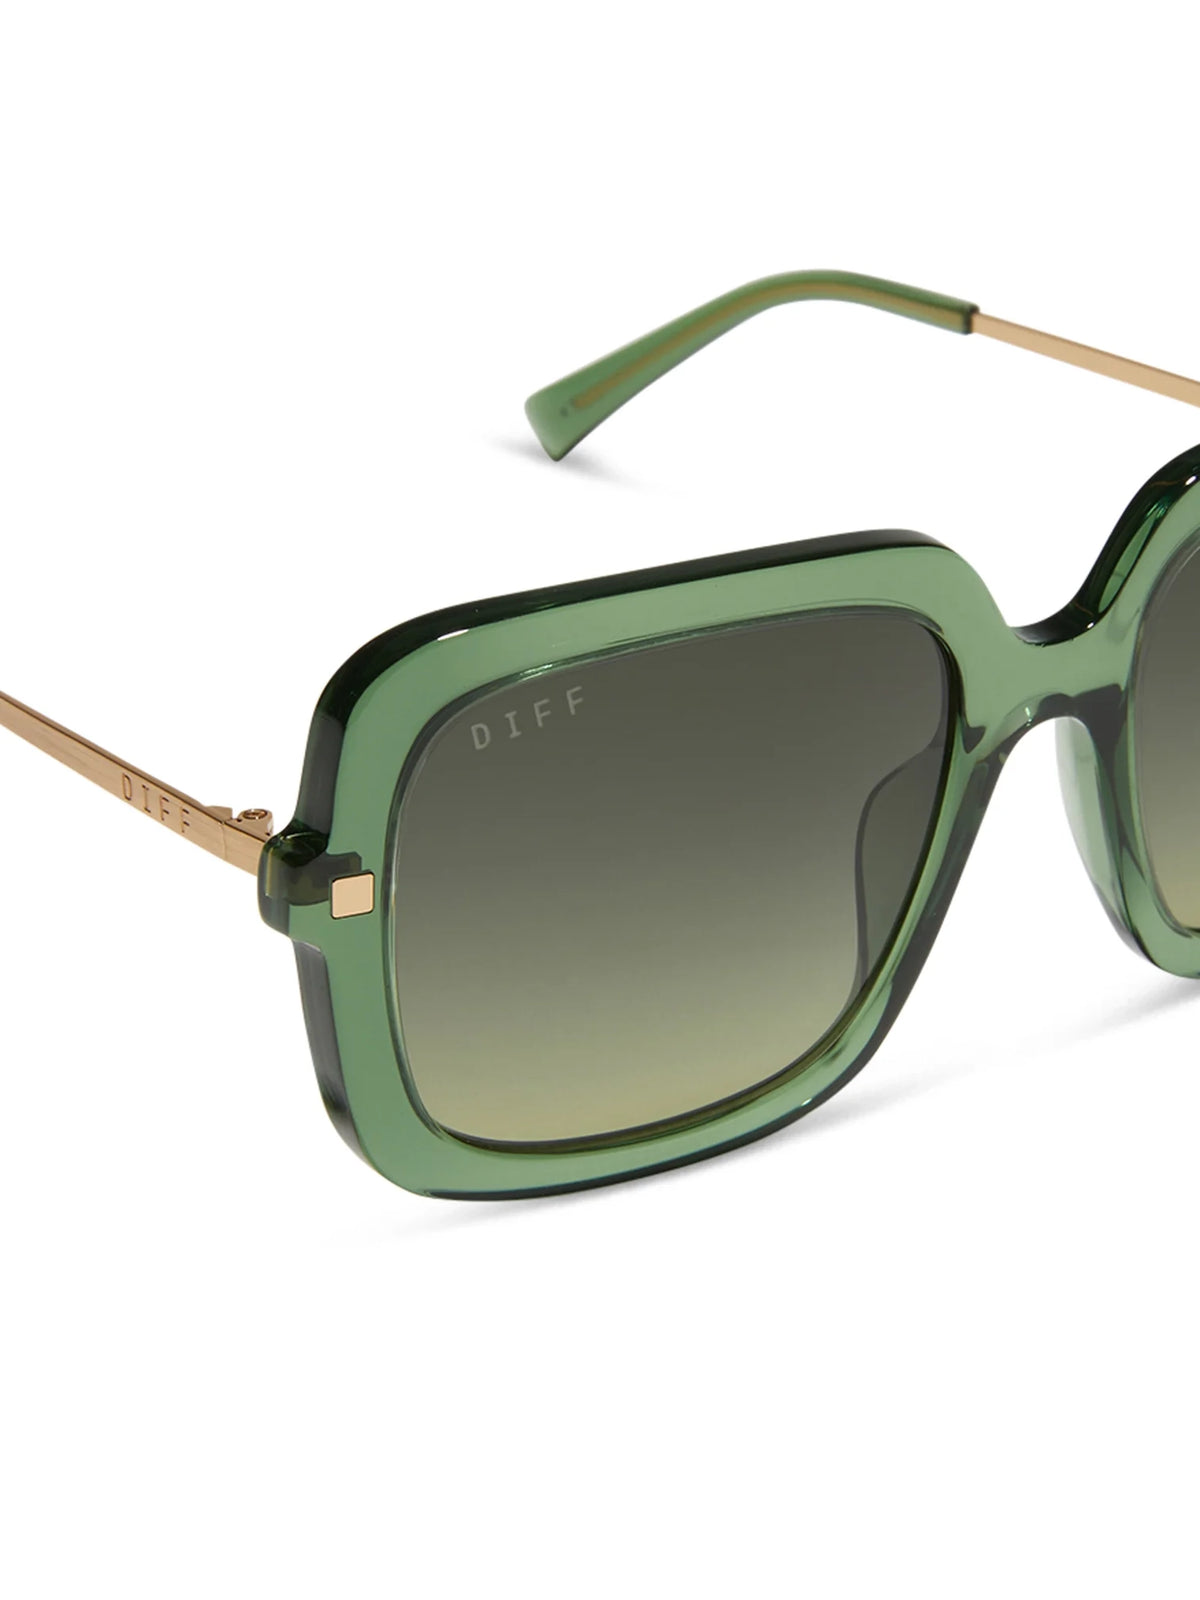 diff eyewear sandra sunglasses in sage crystal g15 gradient polarized